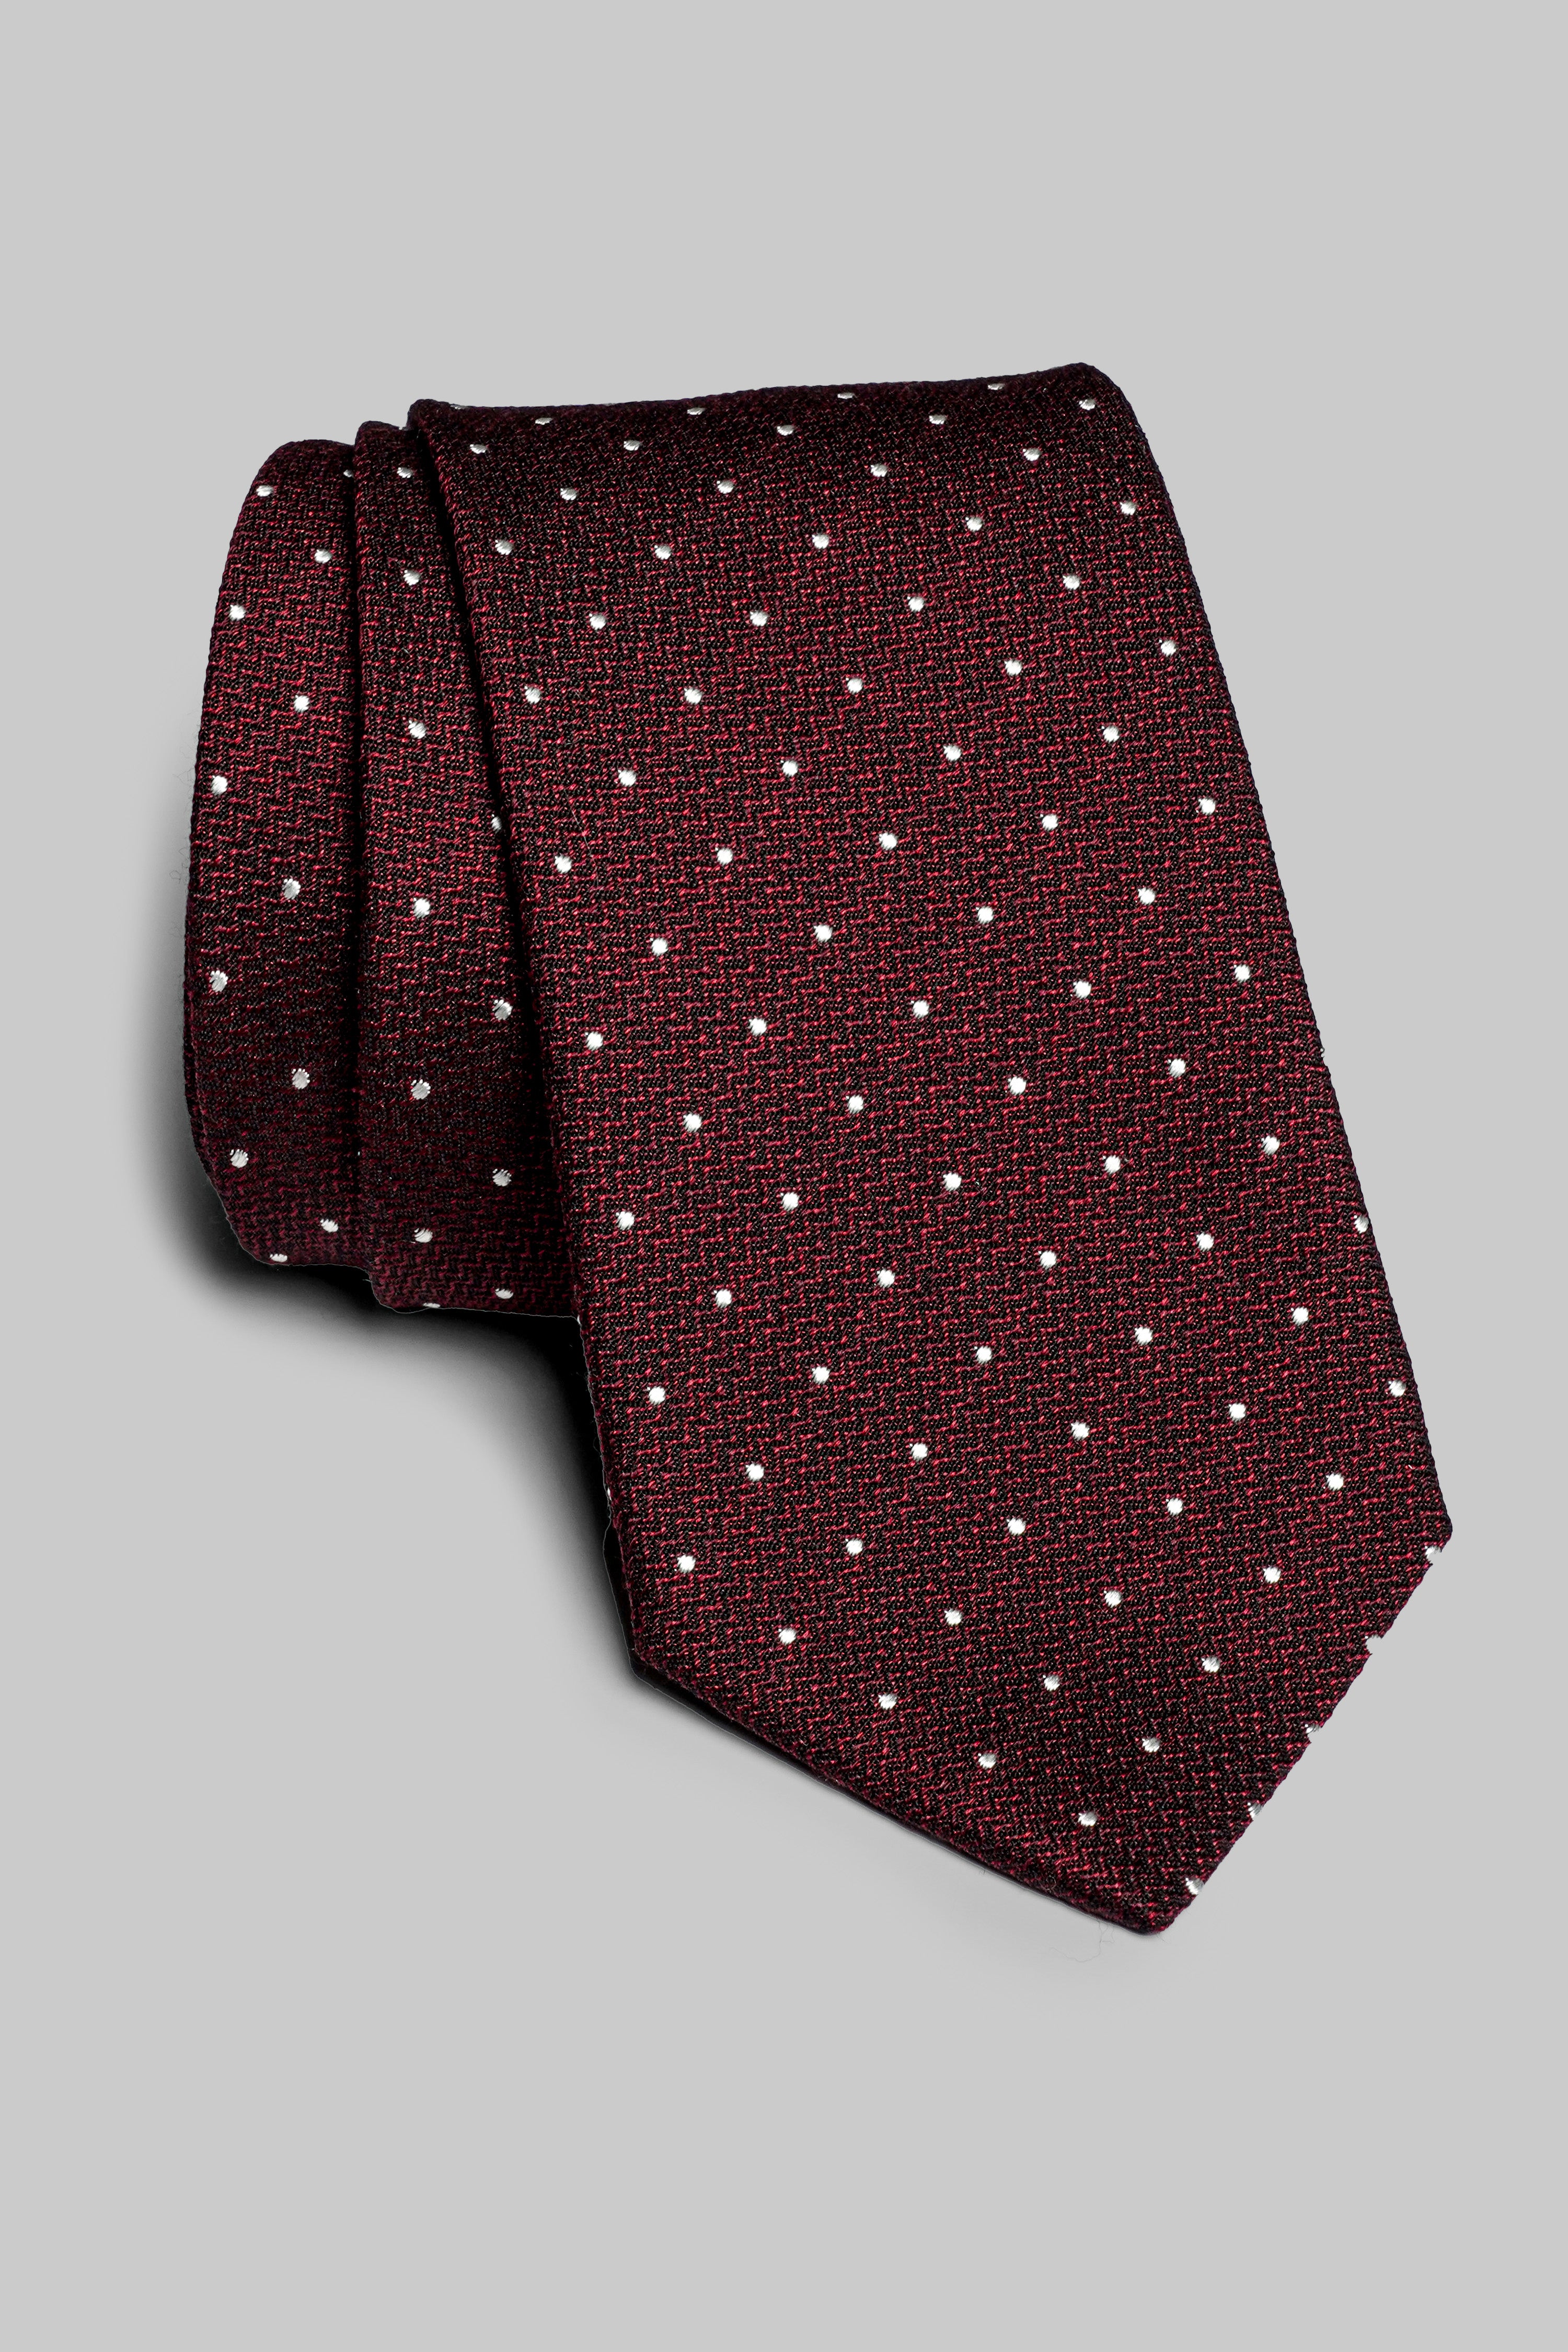 Vue alternative Pindot cravate tissée en violet